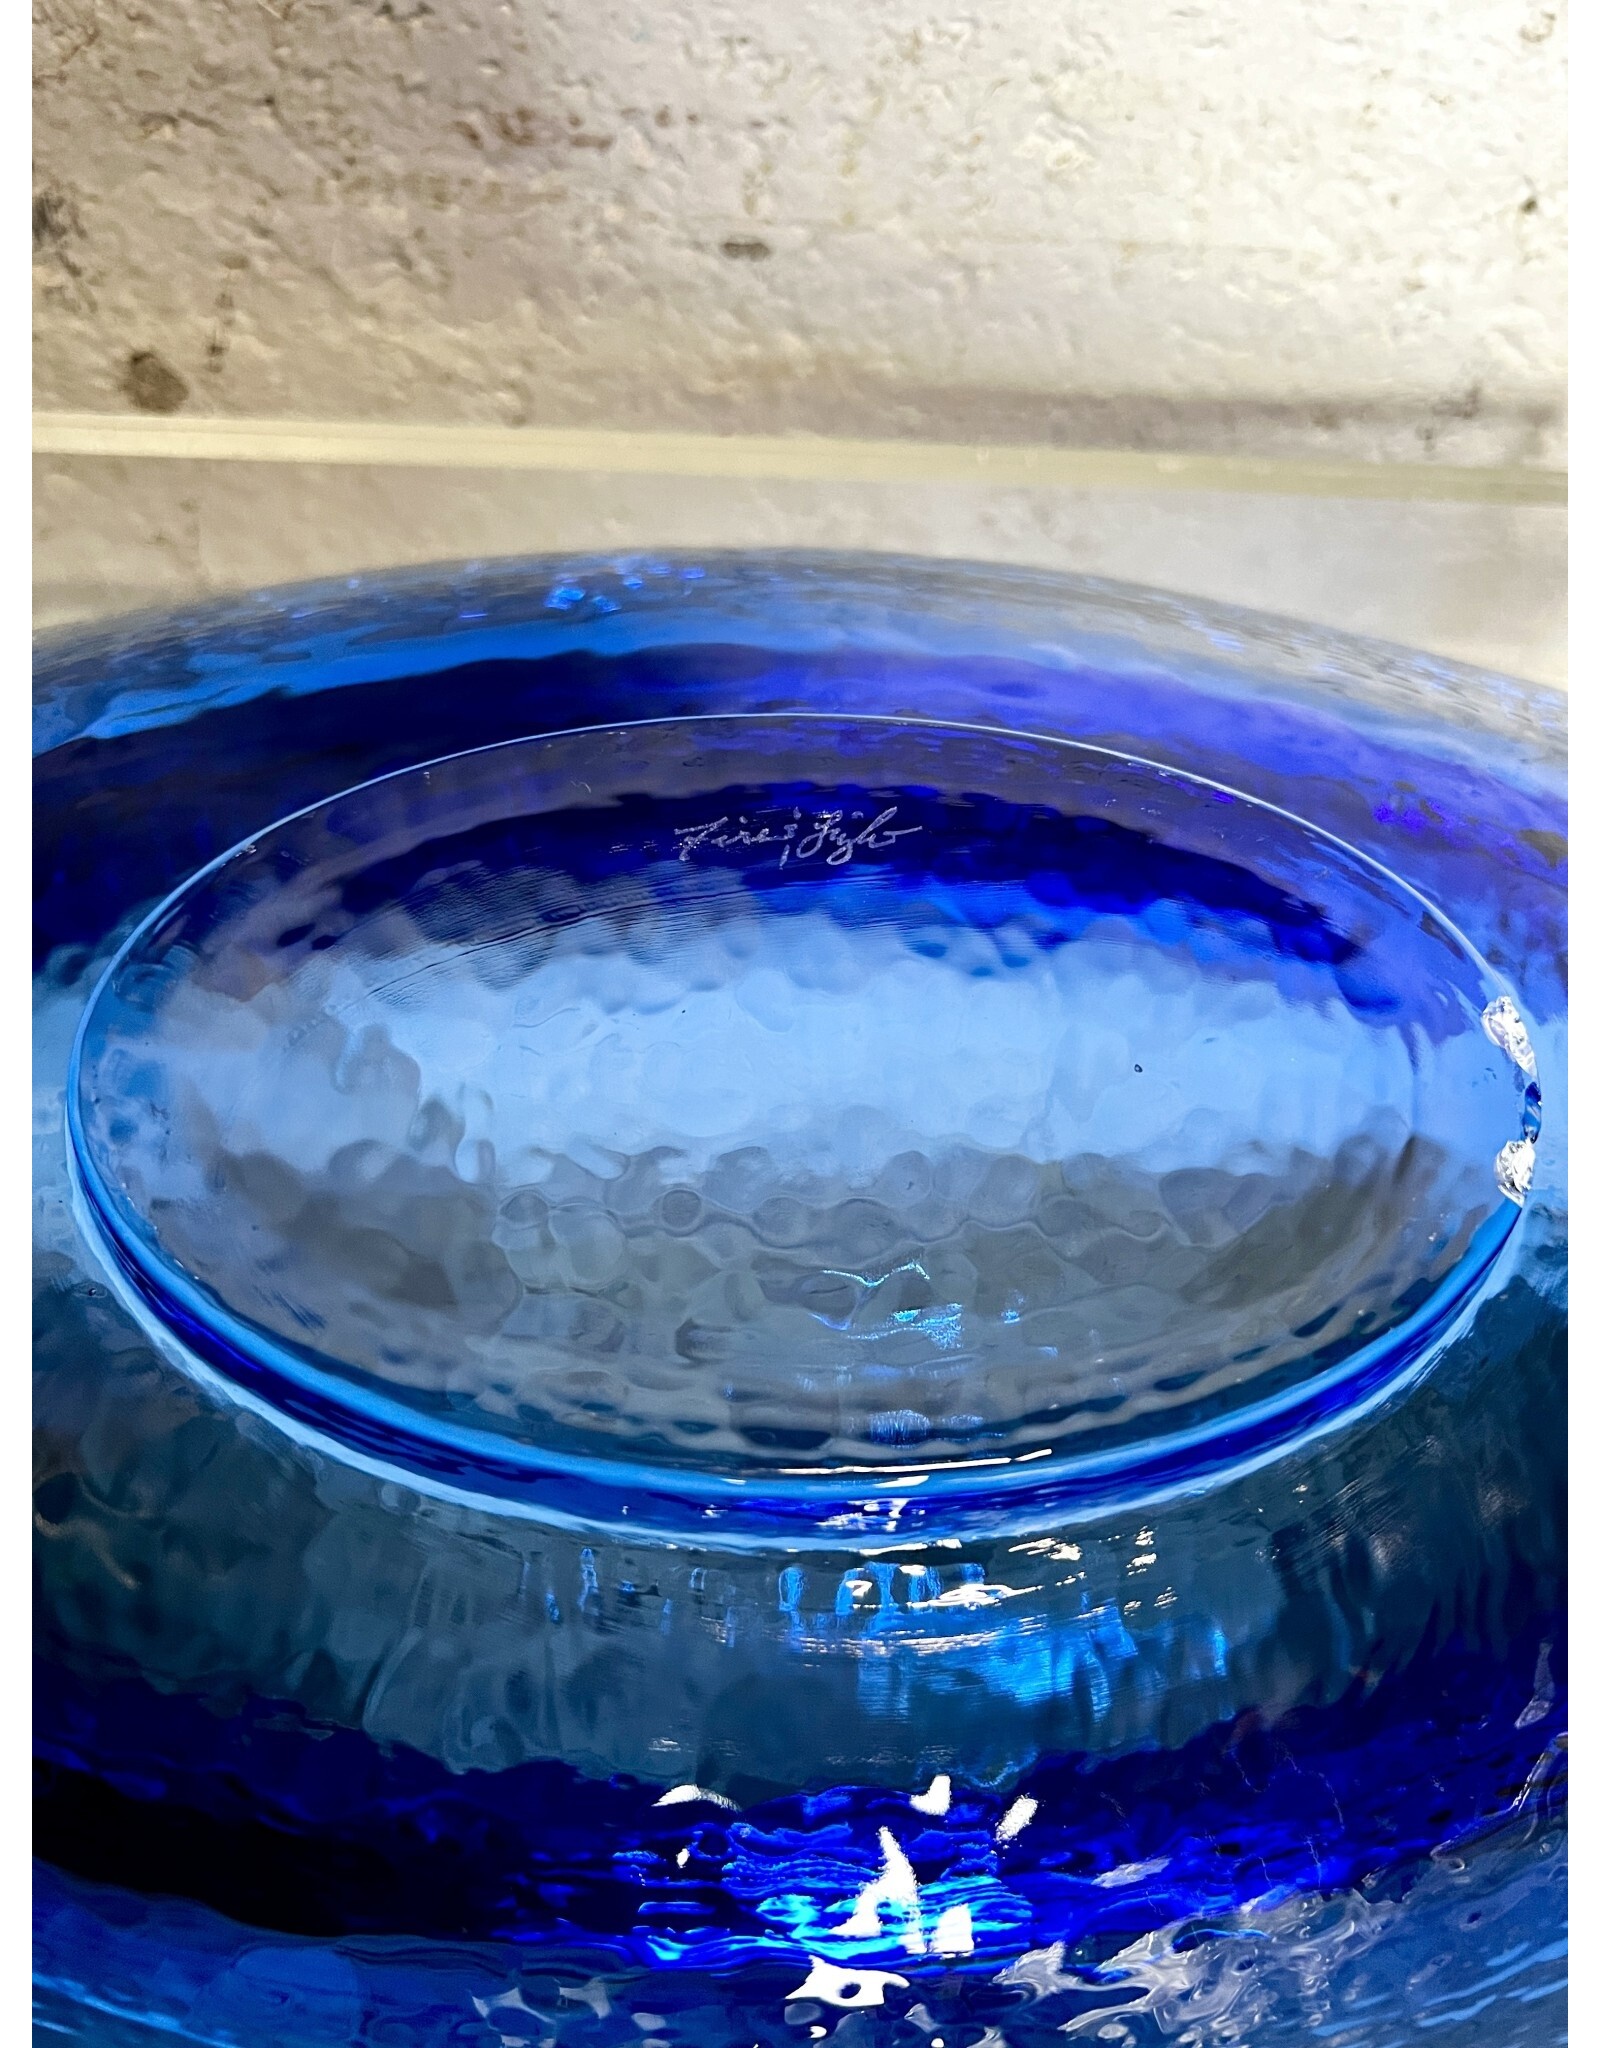 Fire & Light California Cobalt Blue Crystal Dish